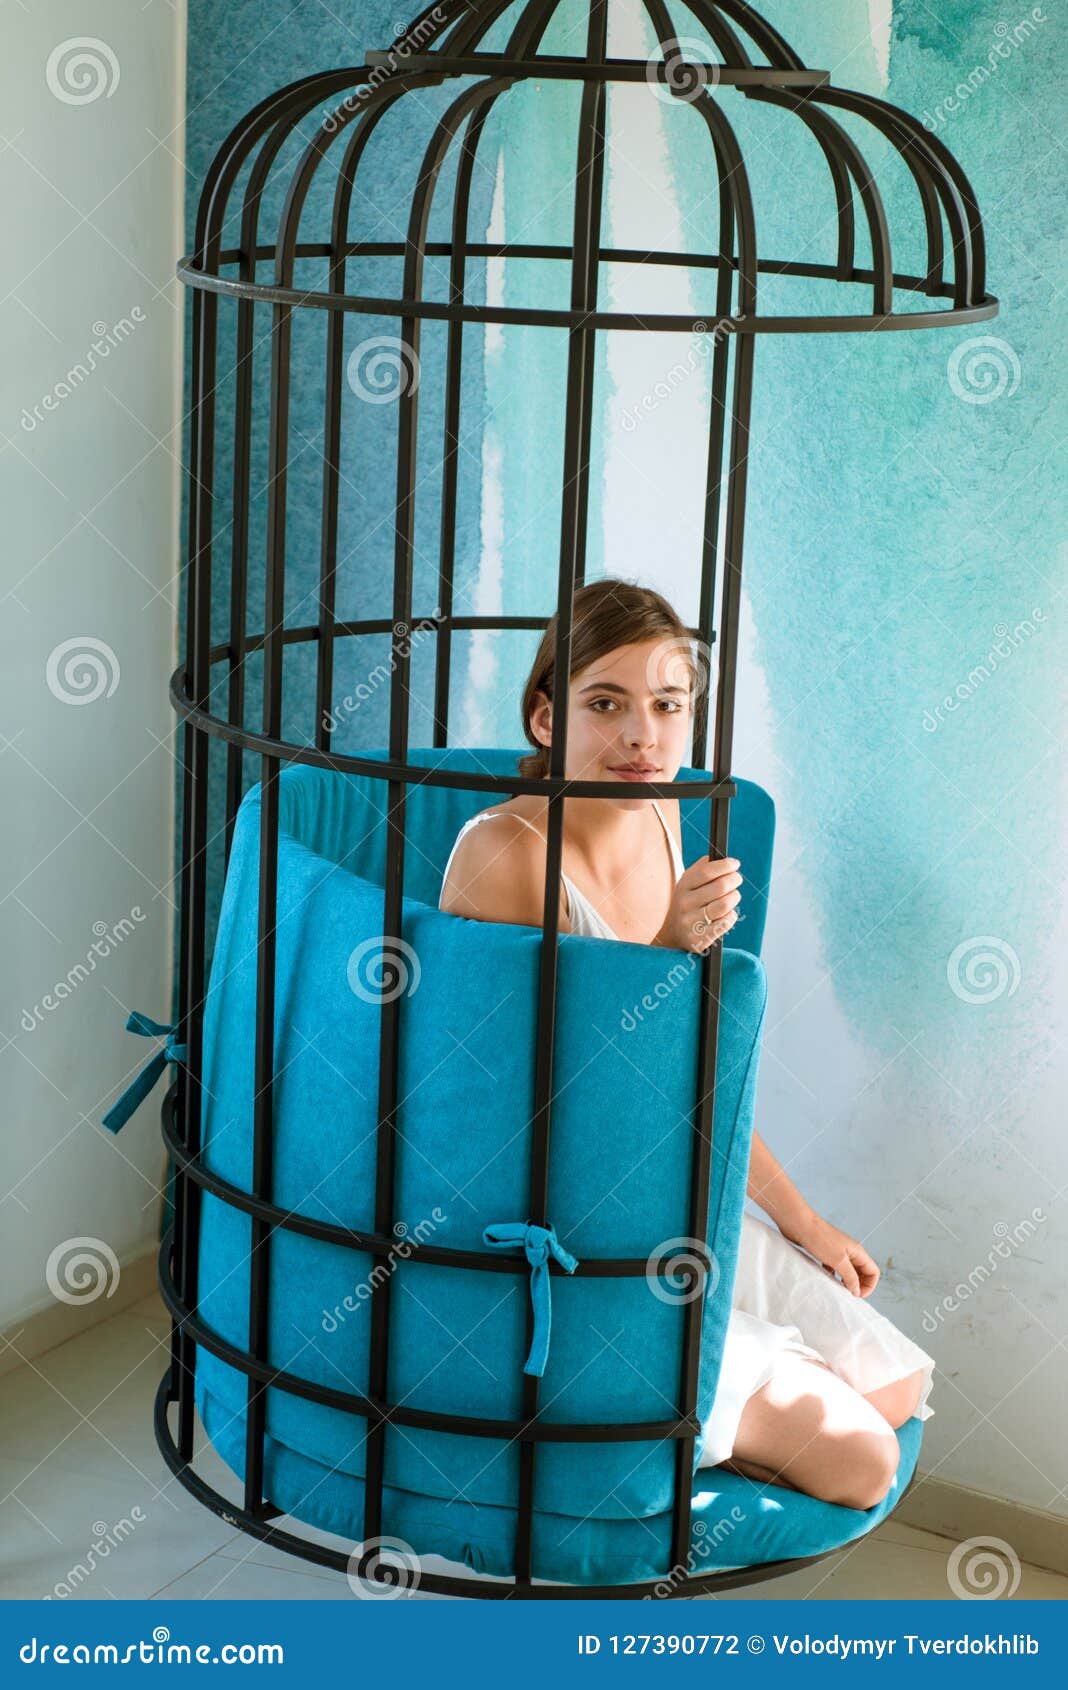 Mental Mind Prisoner Woman In Cage Home Confinement